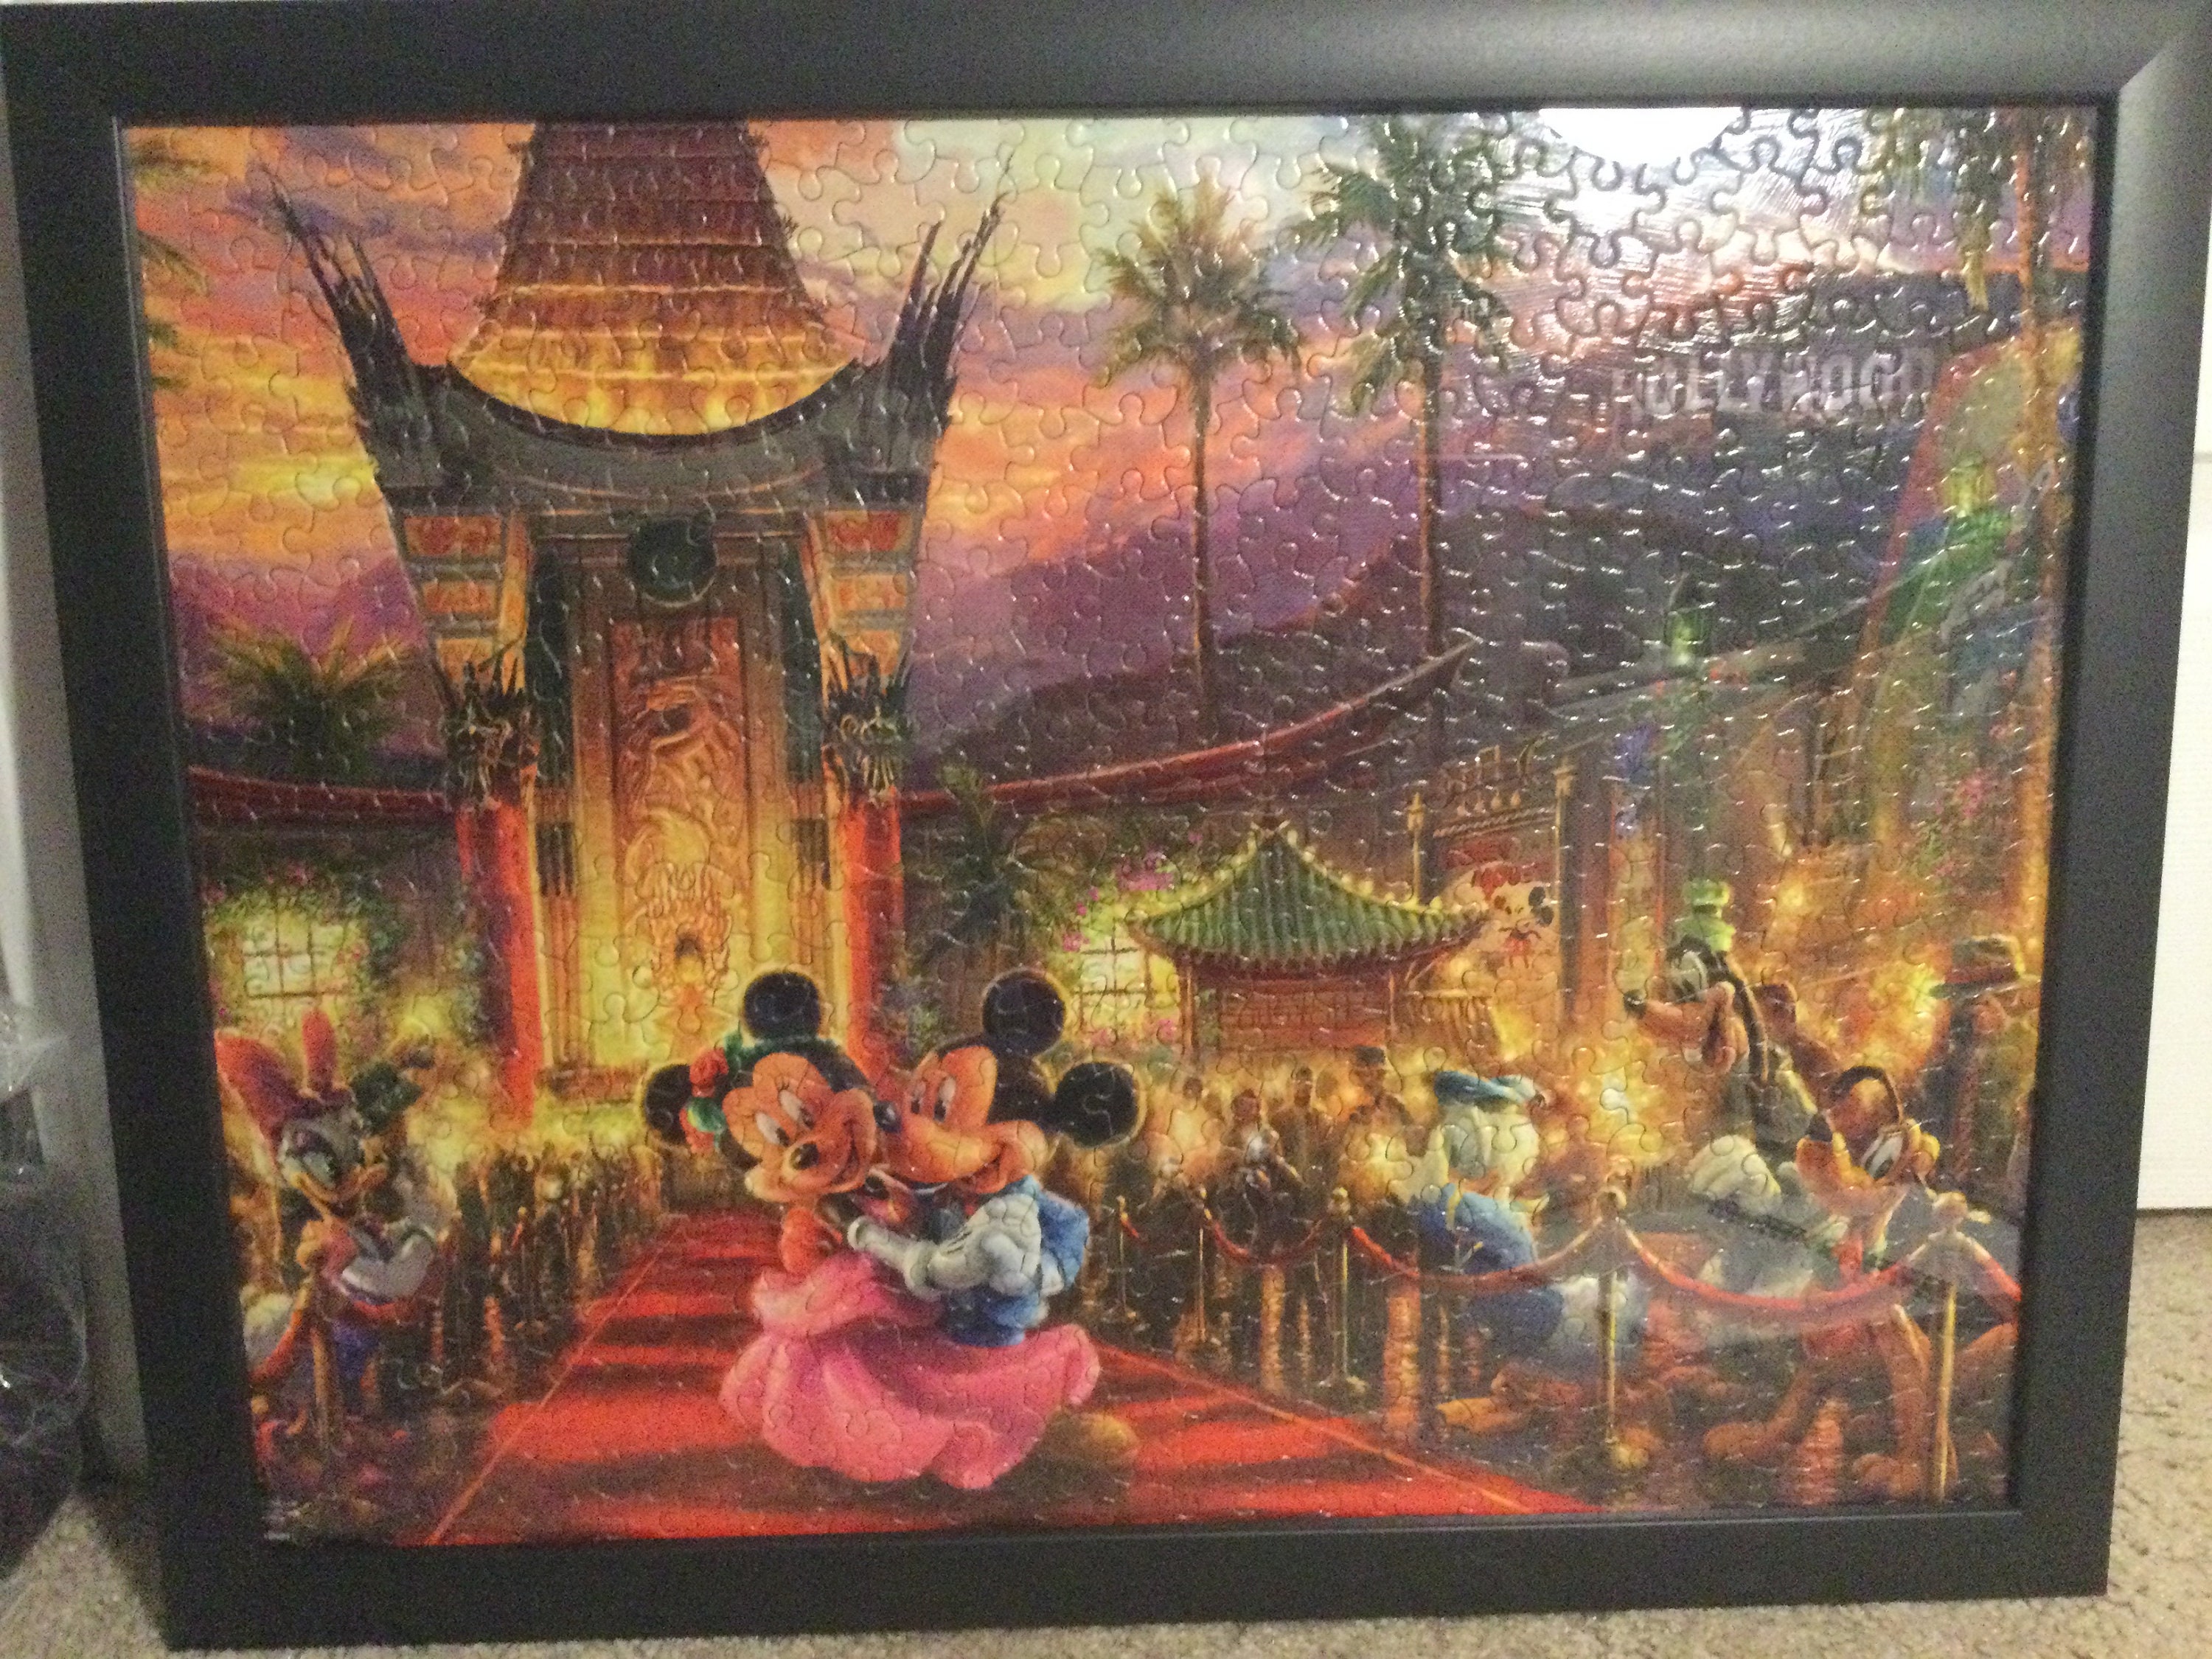 Mickey and Minnie Hollywood Puzzle (Thomas Kinkade Disney